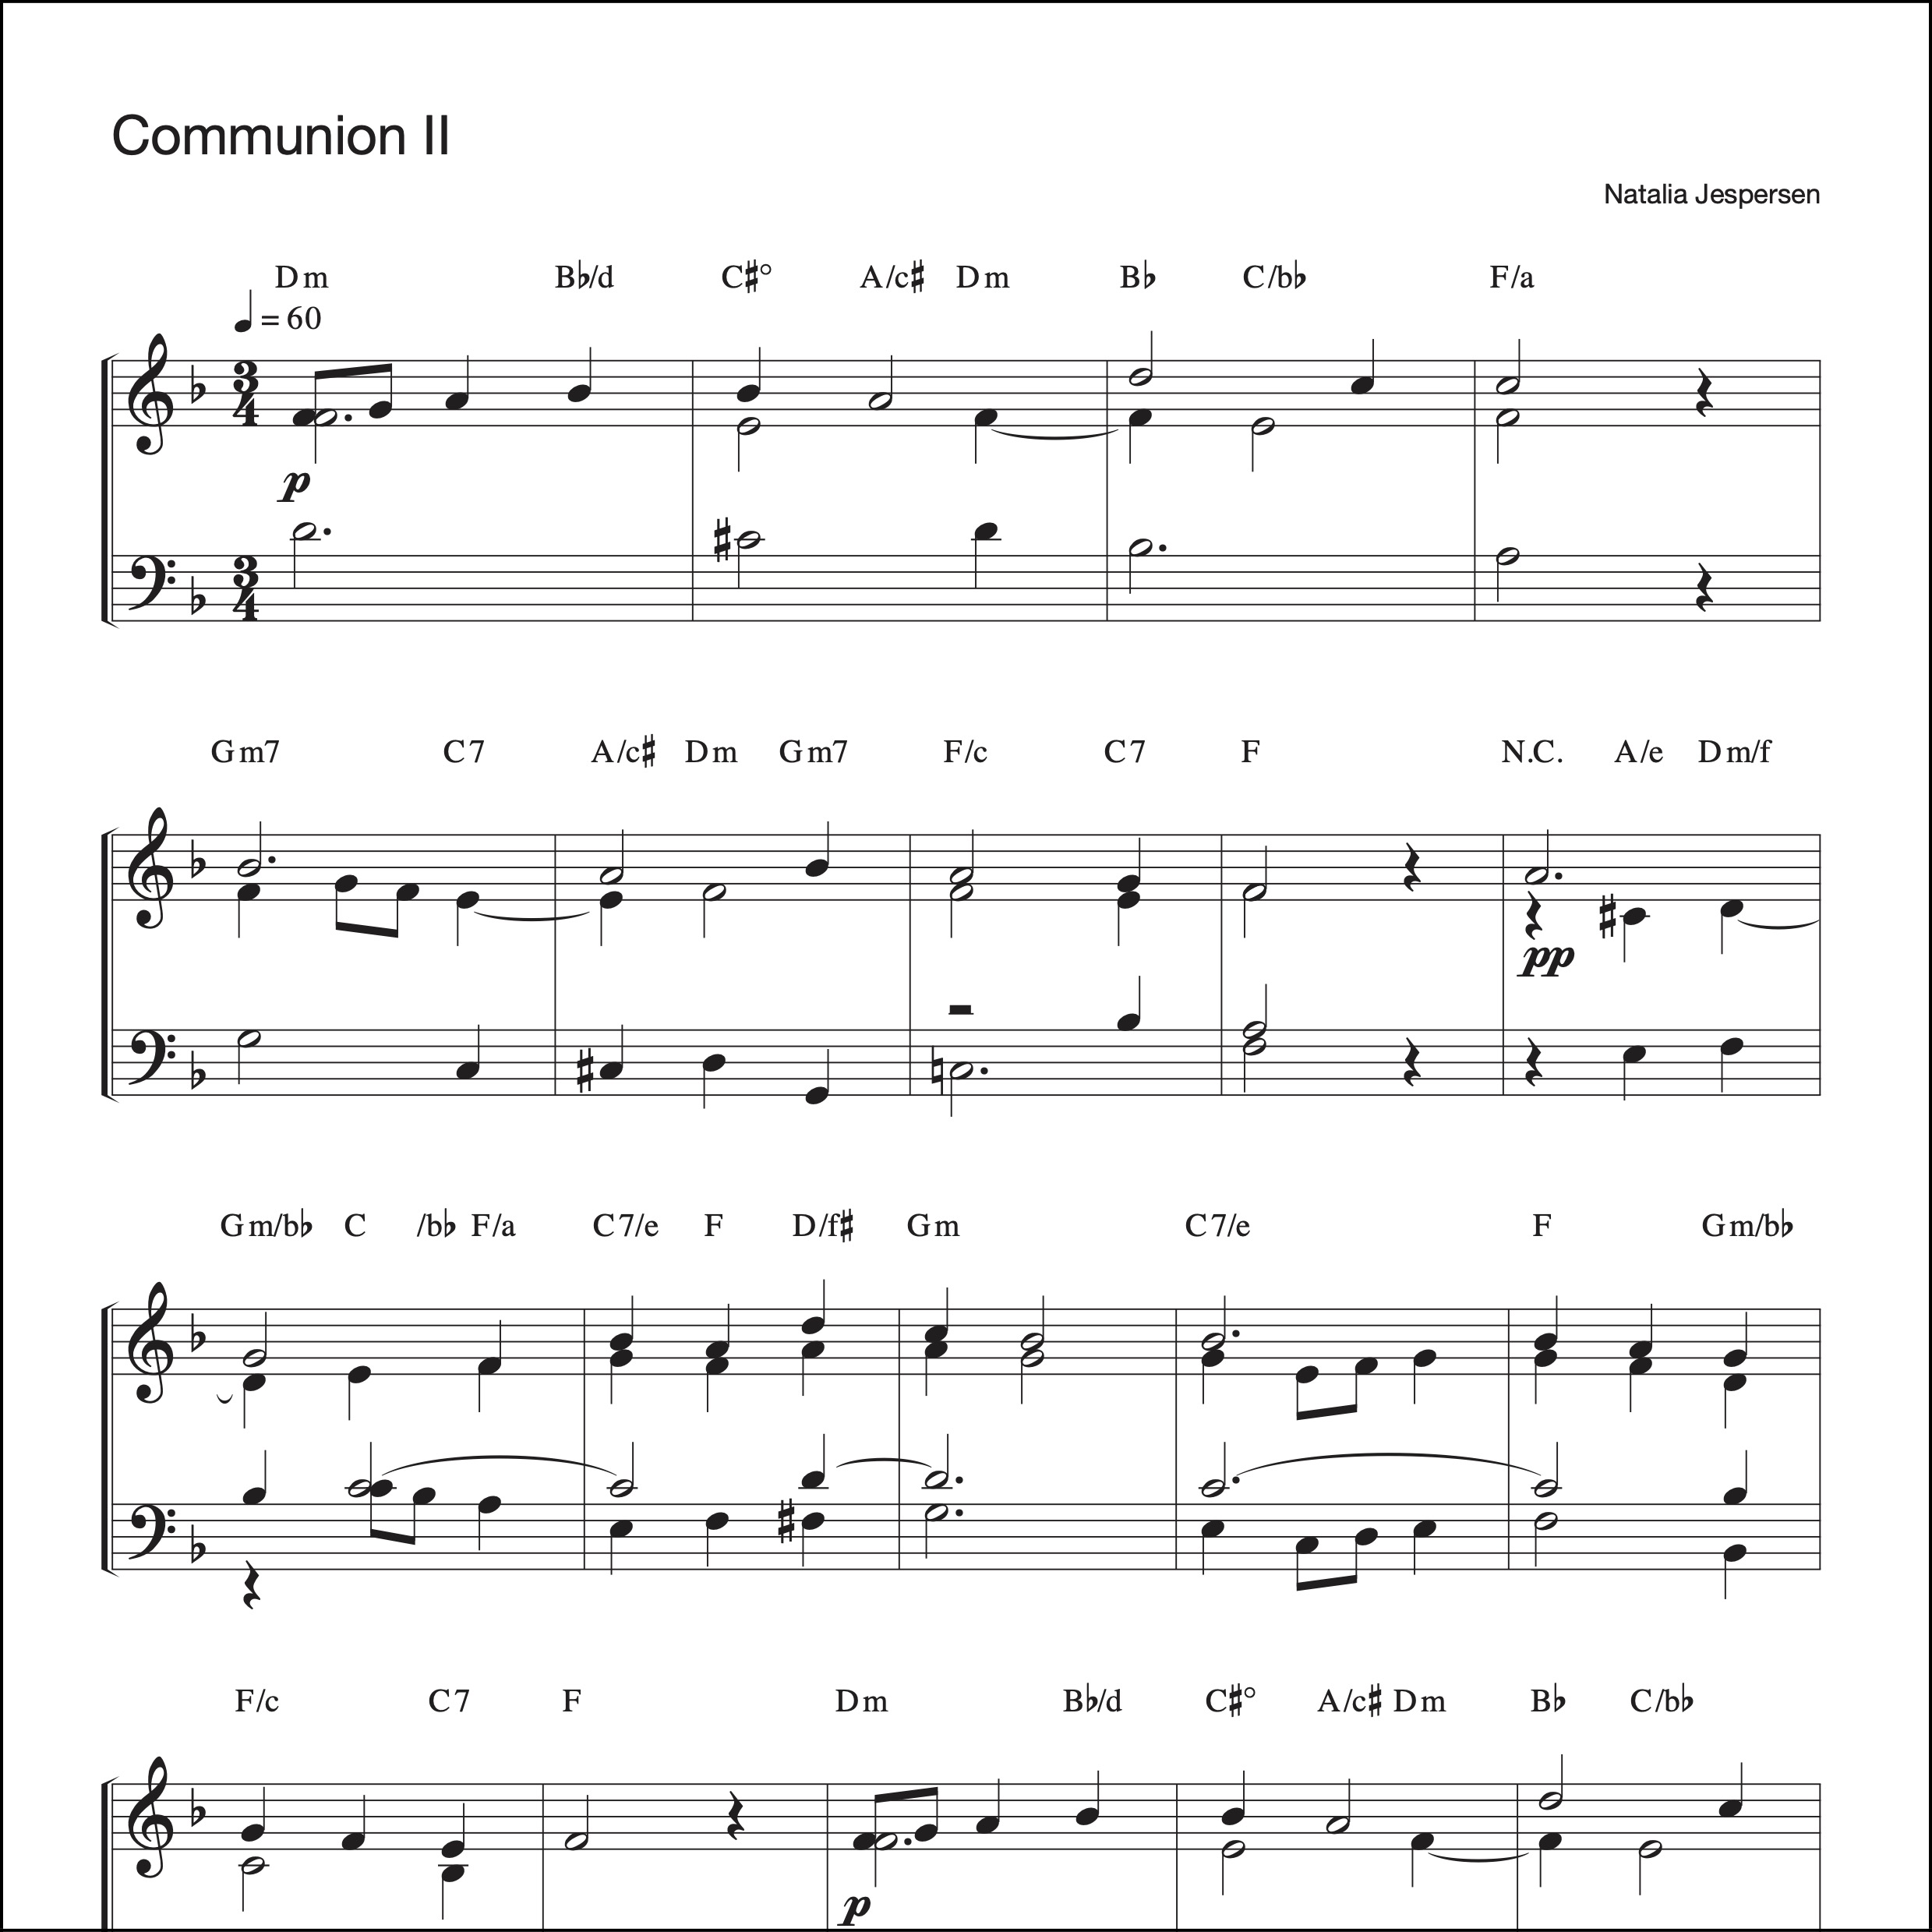 Communion II